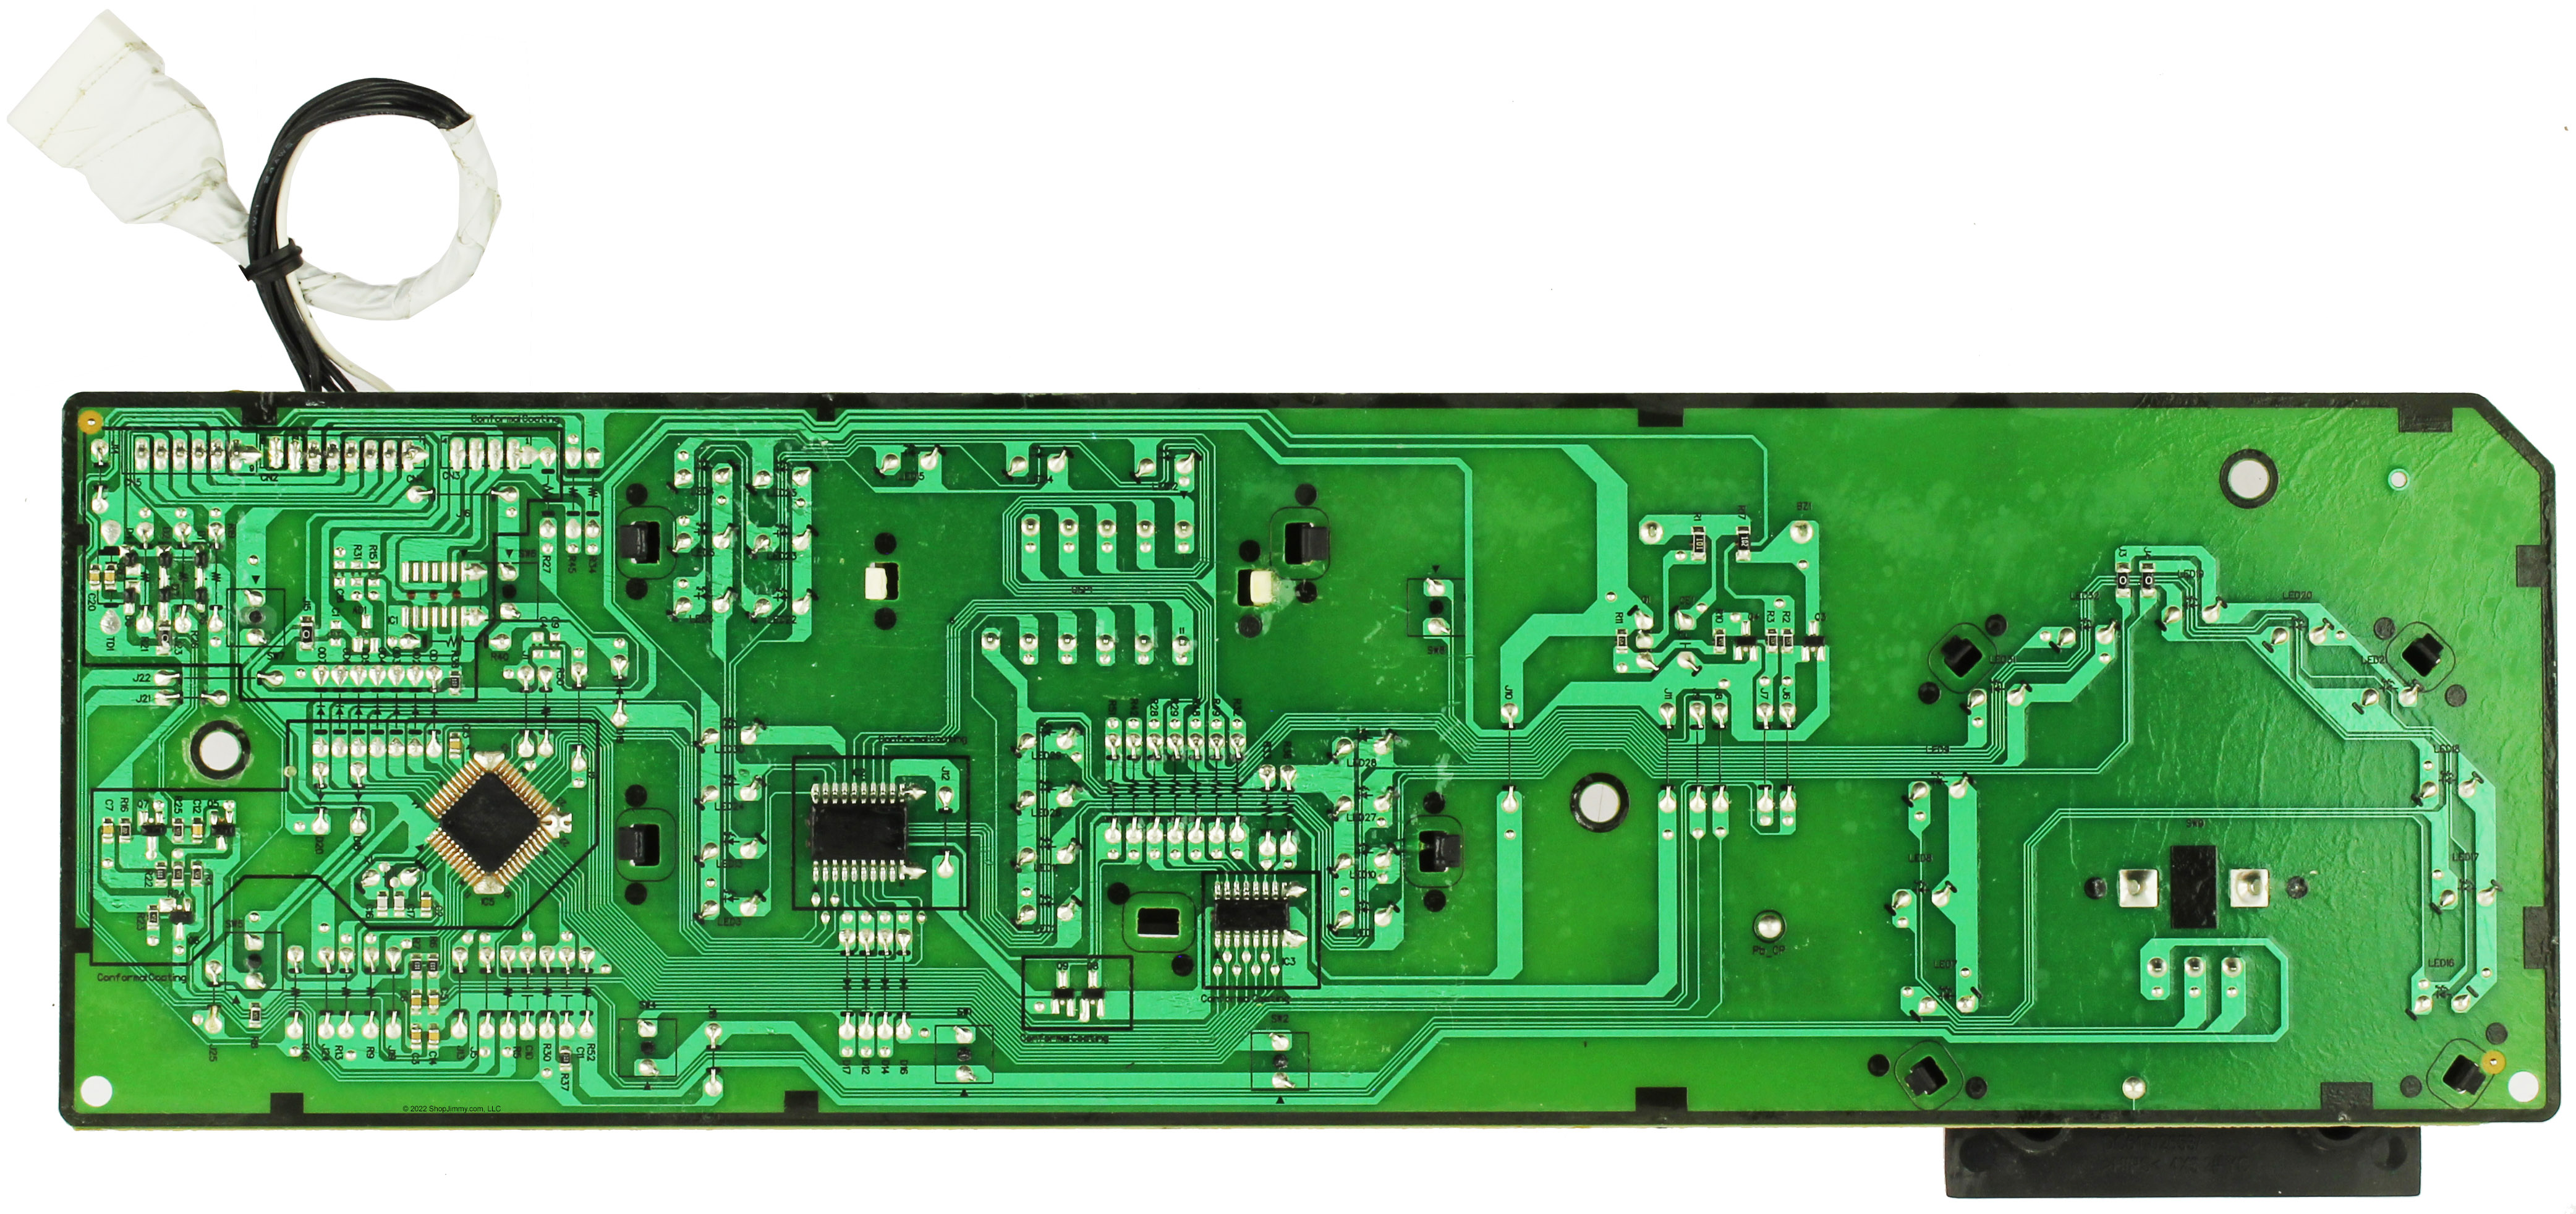 Samsung Dryer DC92-00737C Control Board PCB Assembly Sub